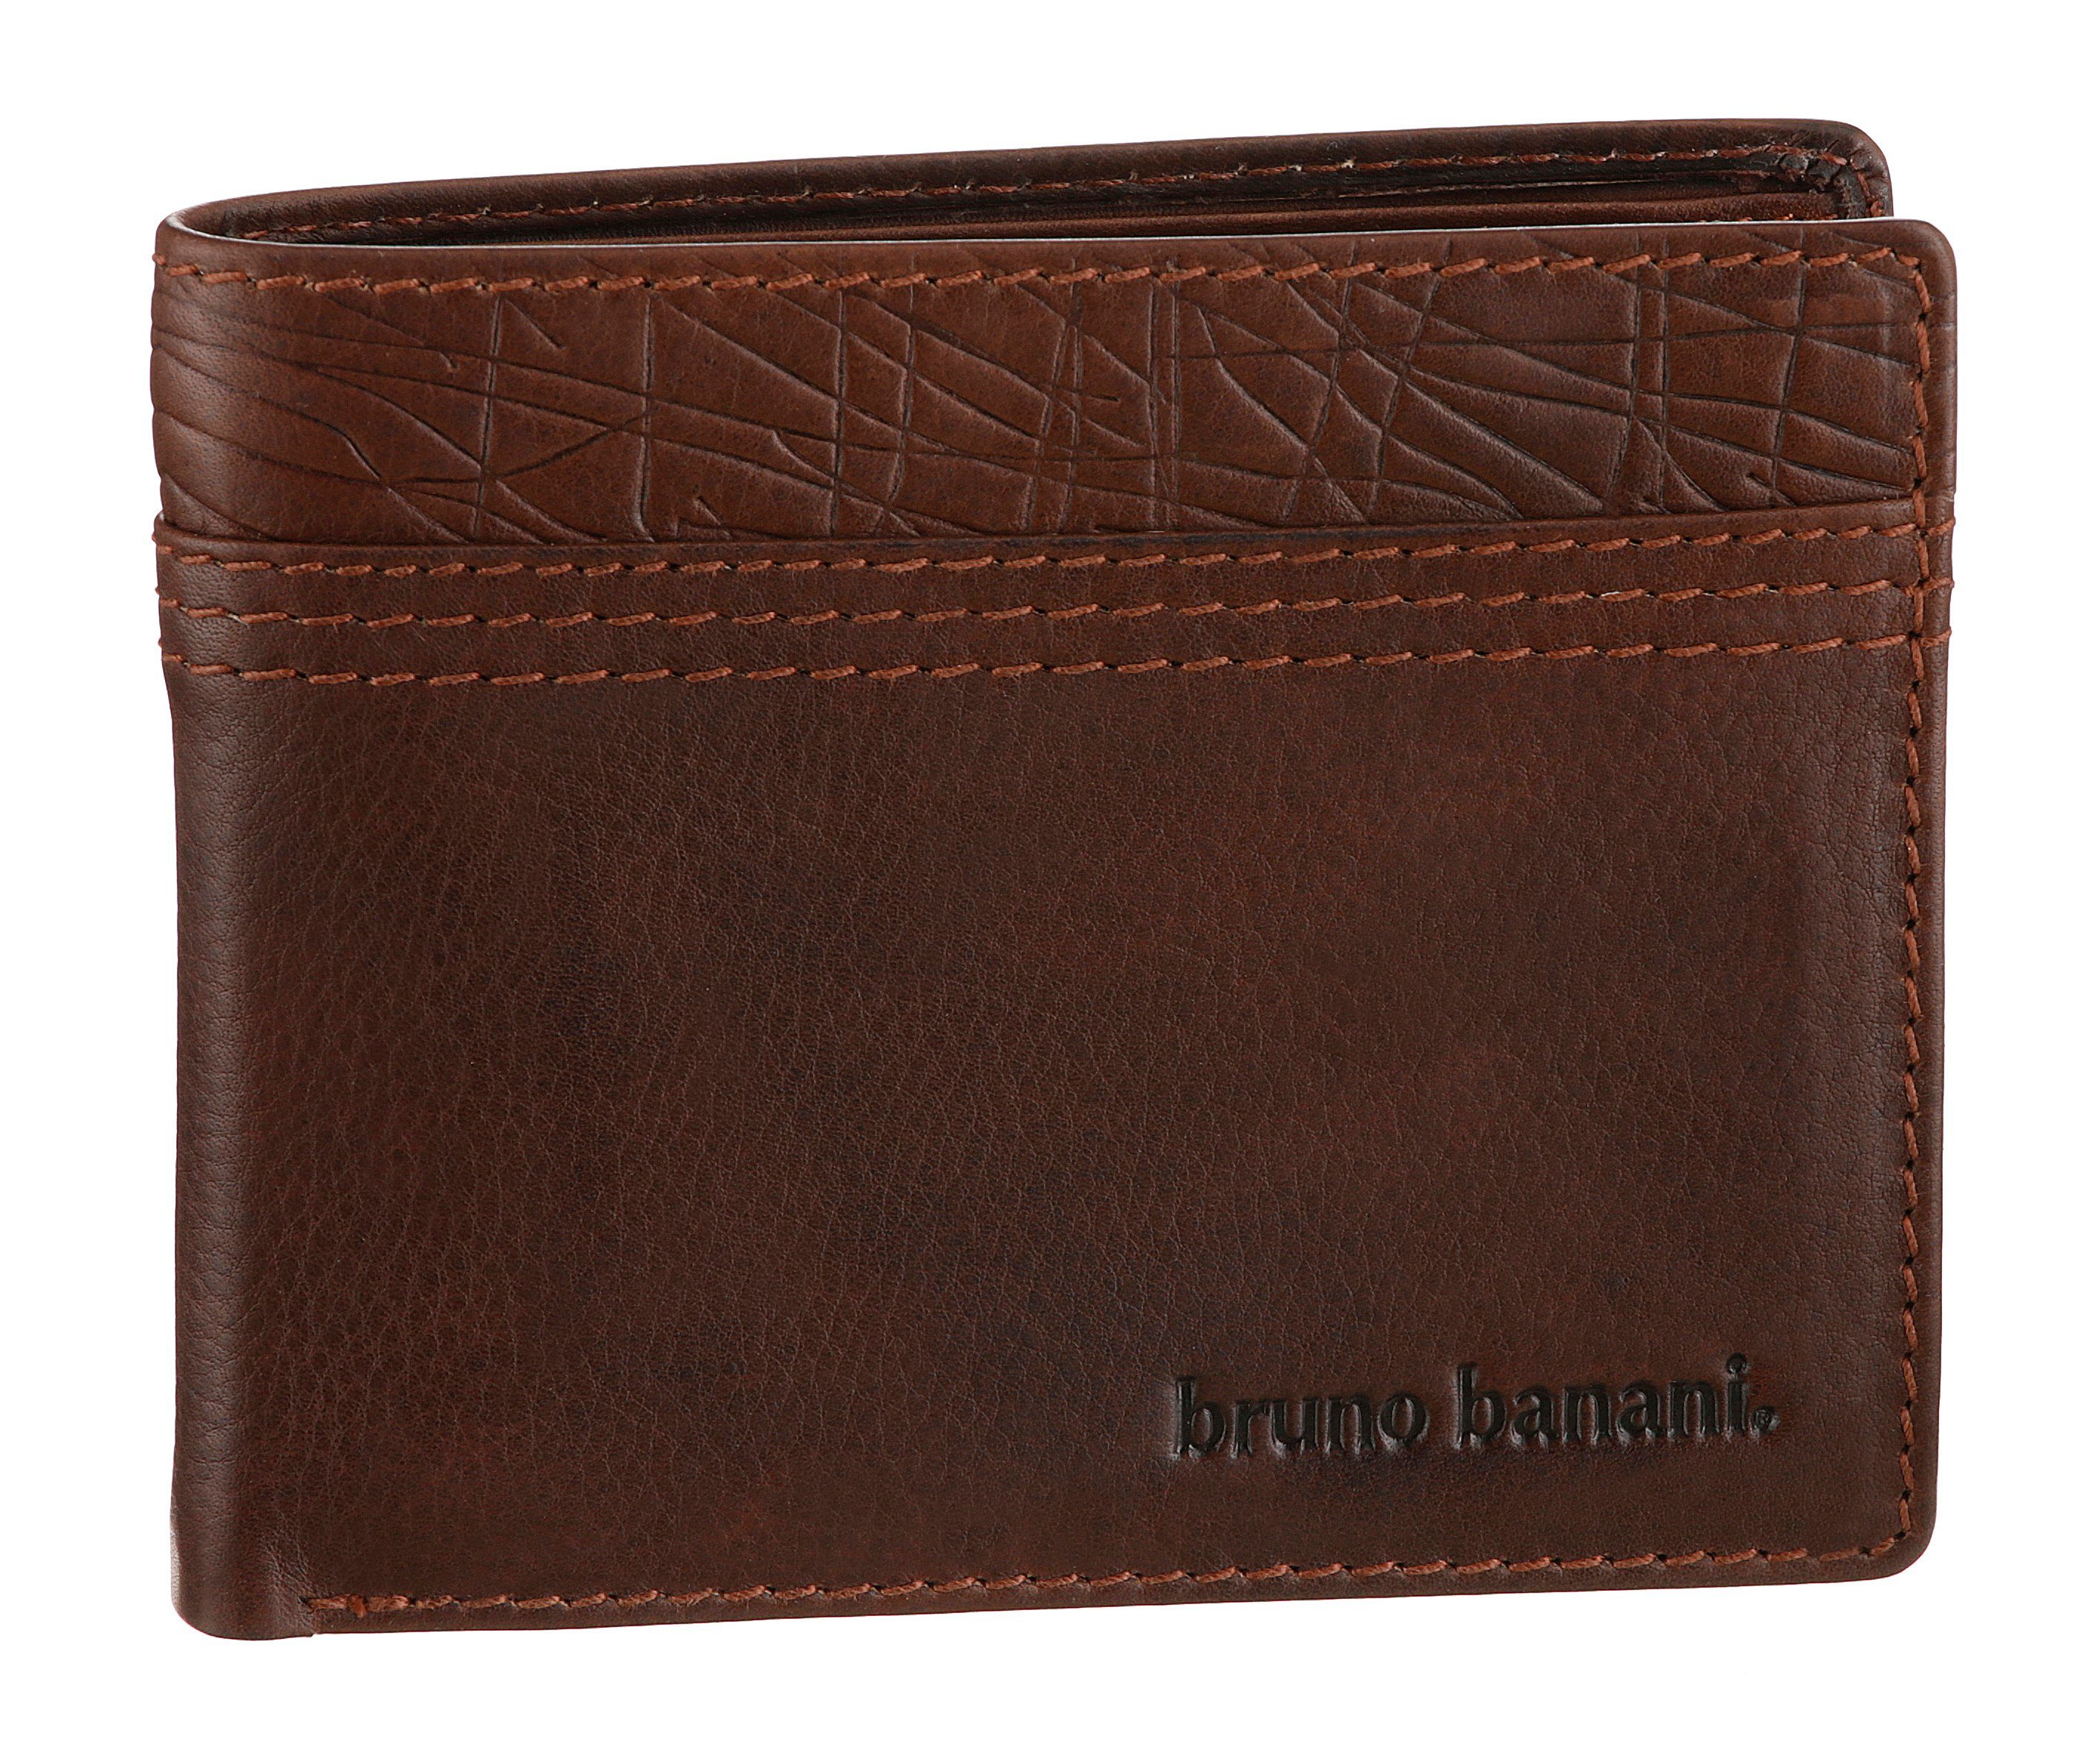 Bruno Banani Geldbörse, aus hochwertigem Leder